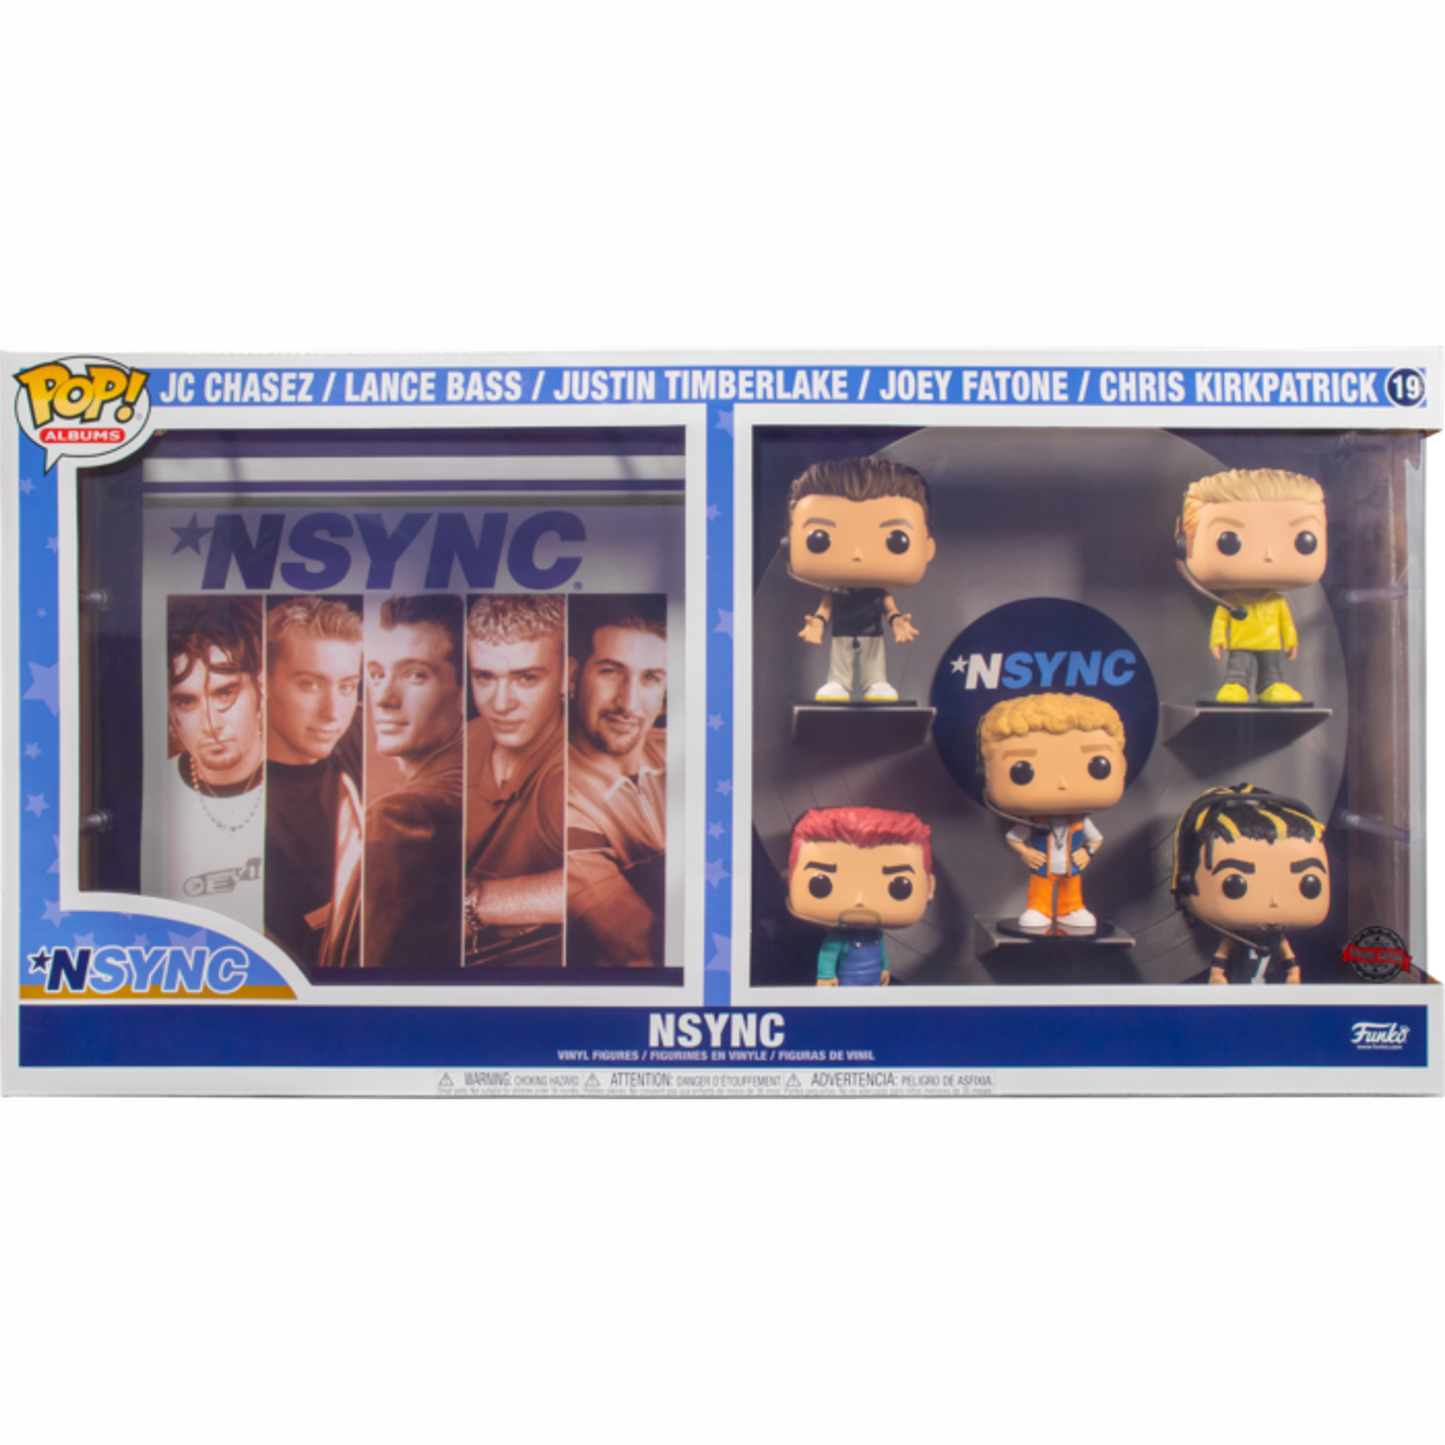 NSYNC - Debut Deluxe Pop! Albums Vinyl Figure 5-Pack (DAMAGED BOX)